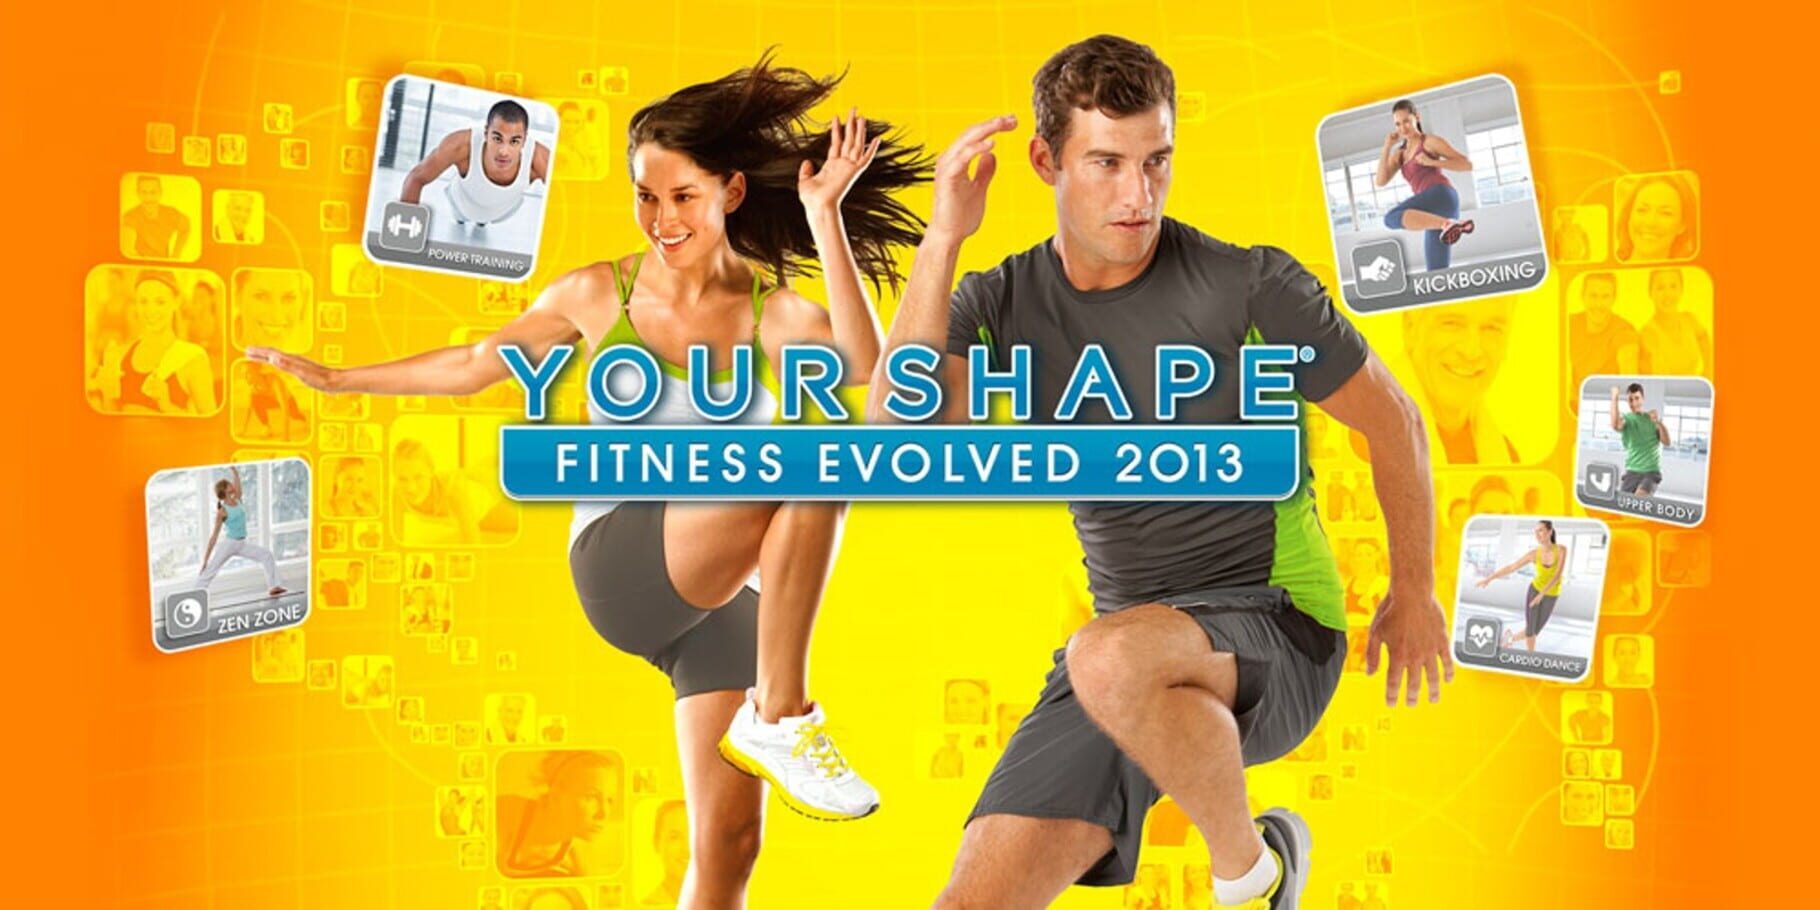 Arte - Your Shape Fitness Evolved 2013